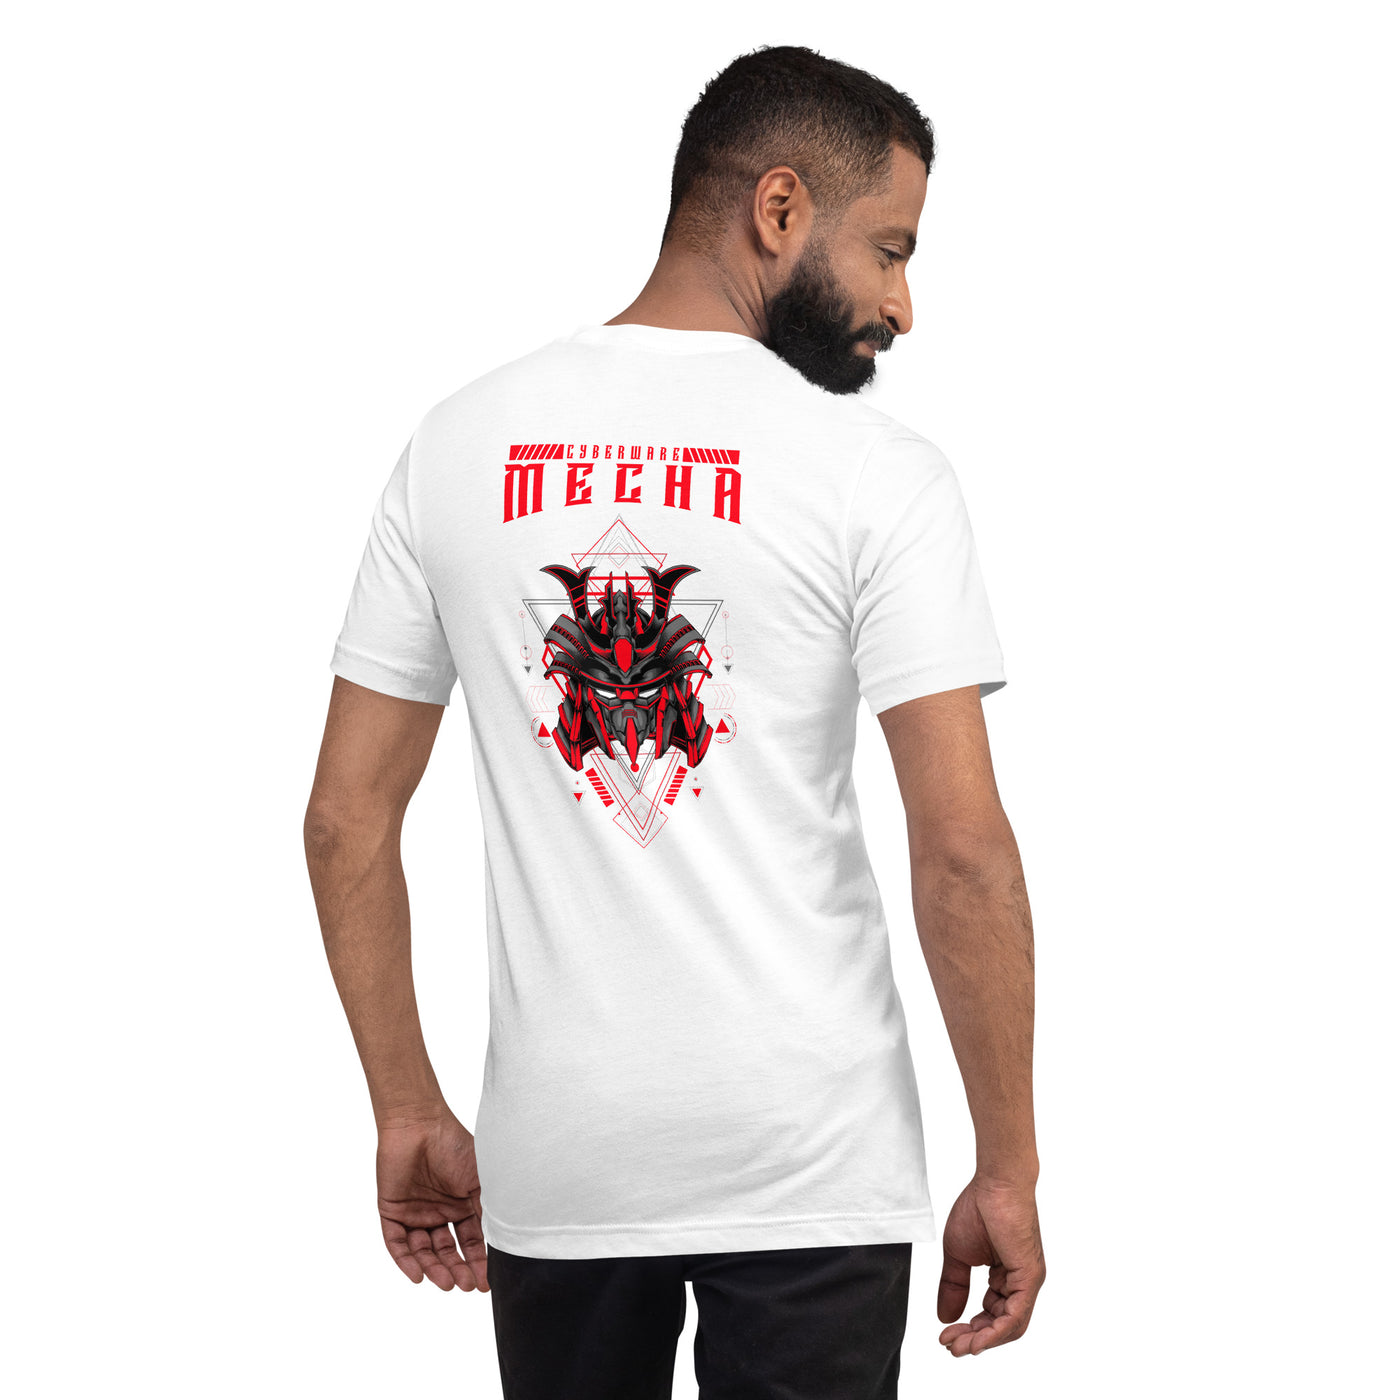 CyberWare Mecha - Unisex t-shirt ( Back Print )